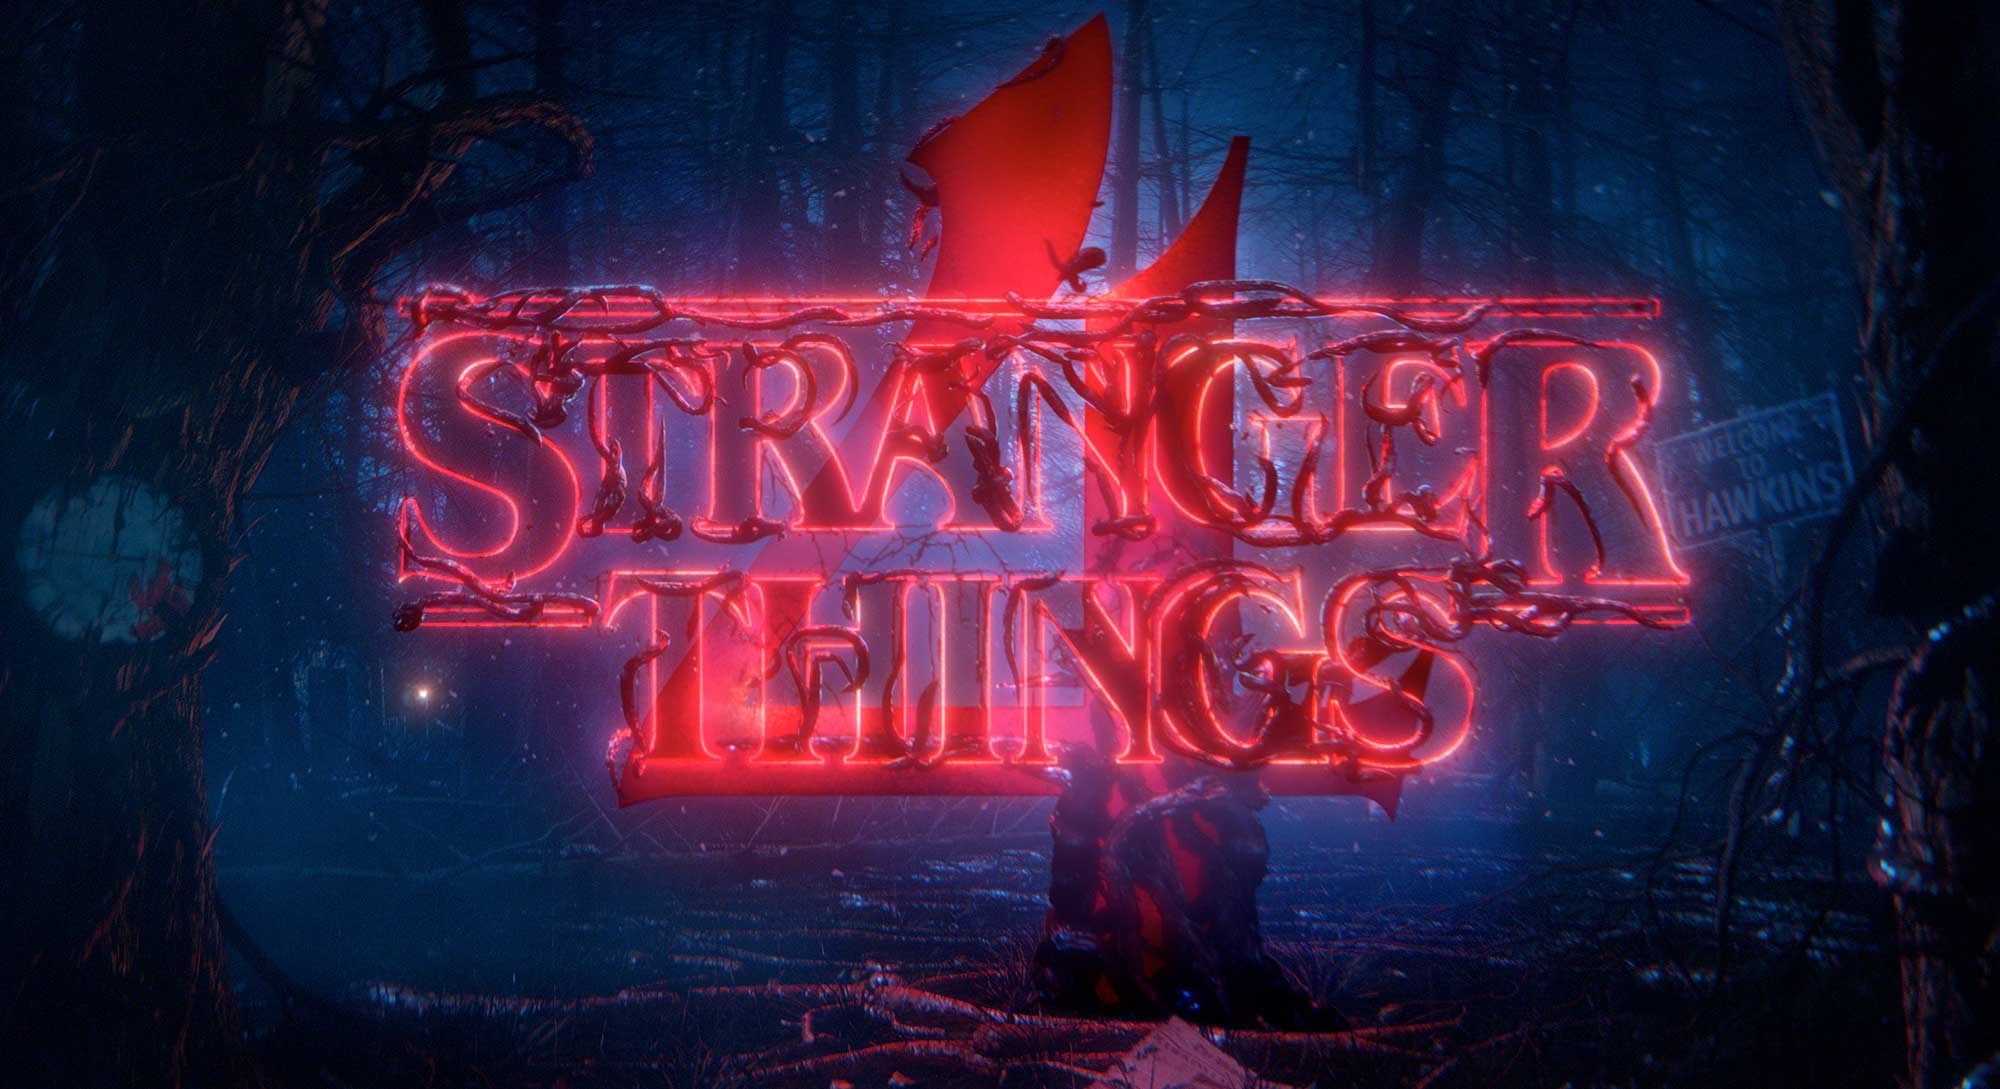 Stranger Things Clothes, Gear & More | Netflix Shop